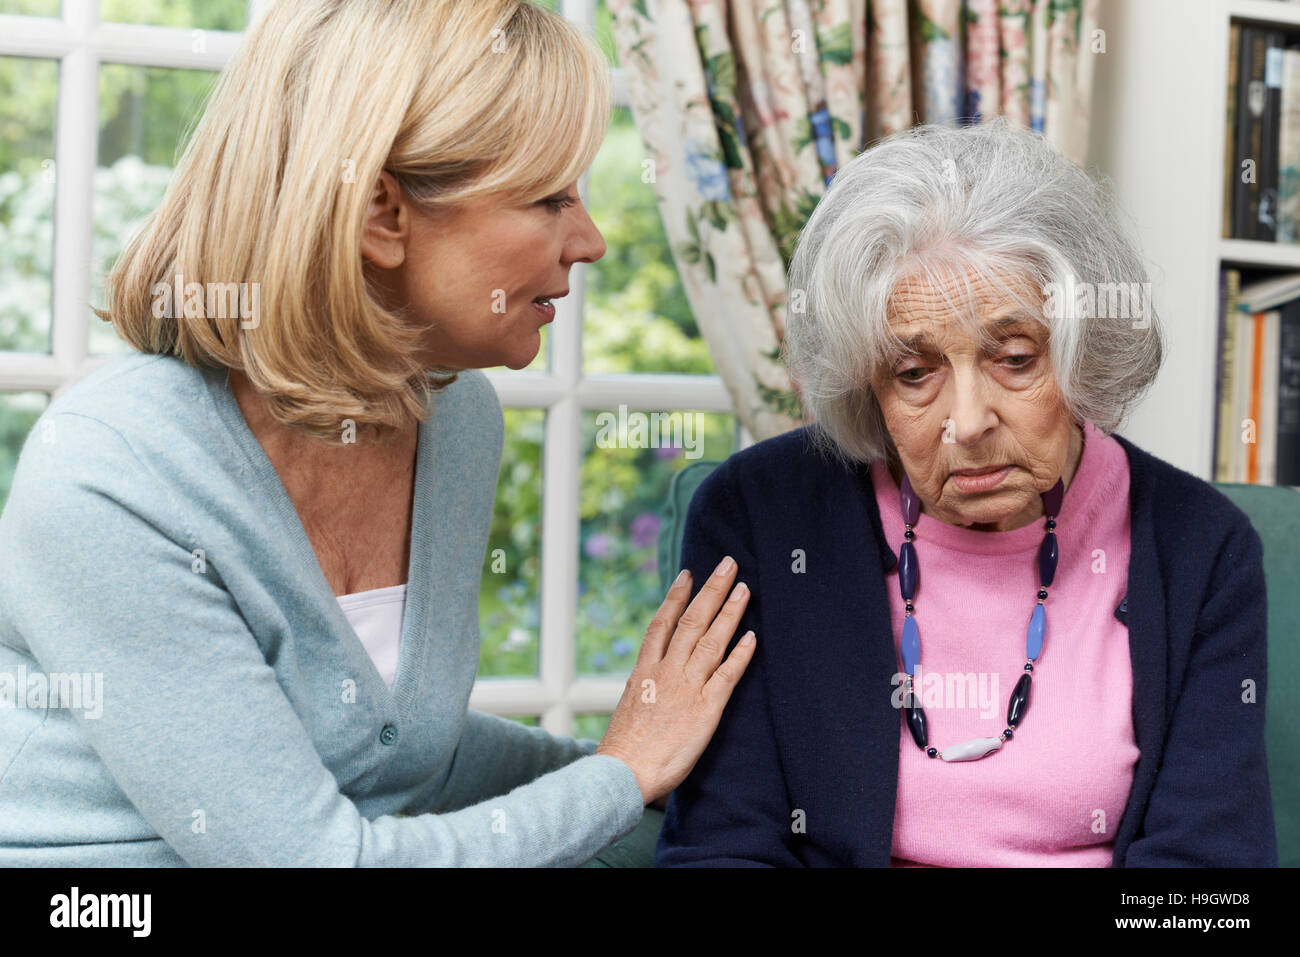 Mature Female Friend Comforting Unhappy Senior Woman Stock Photo